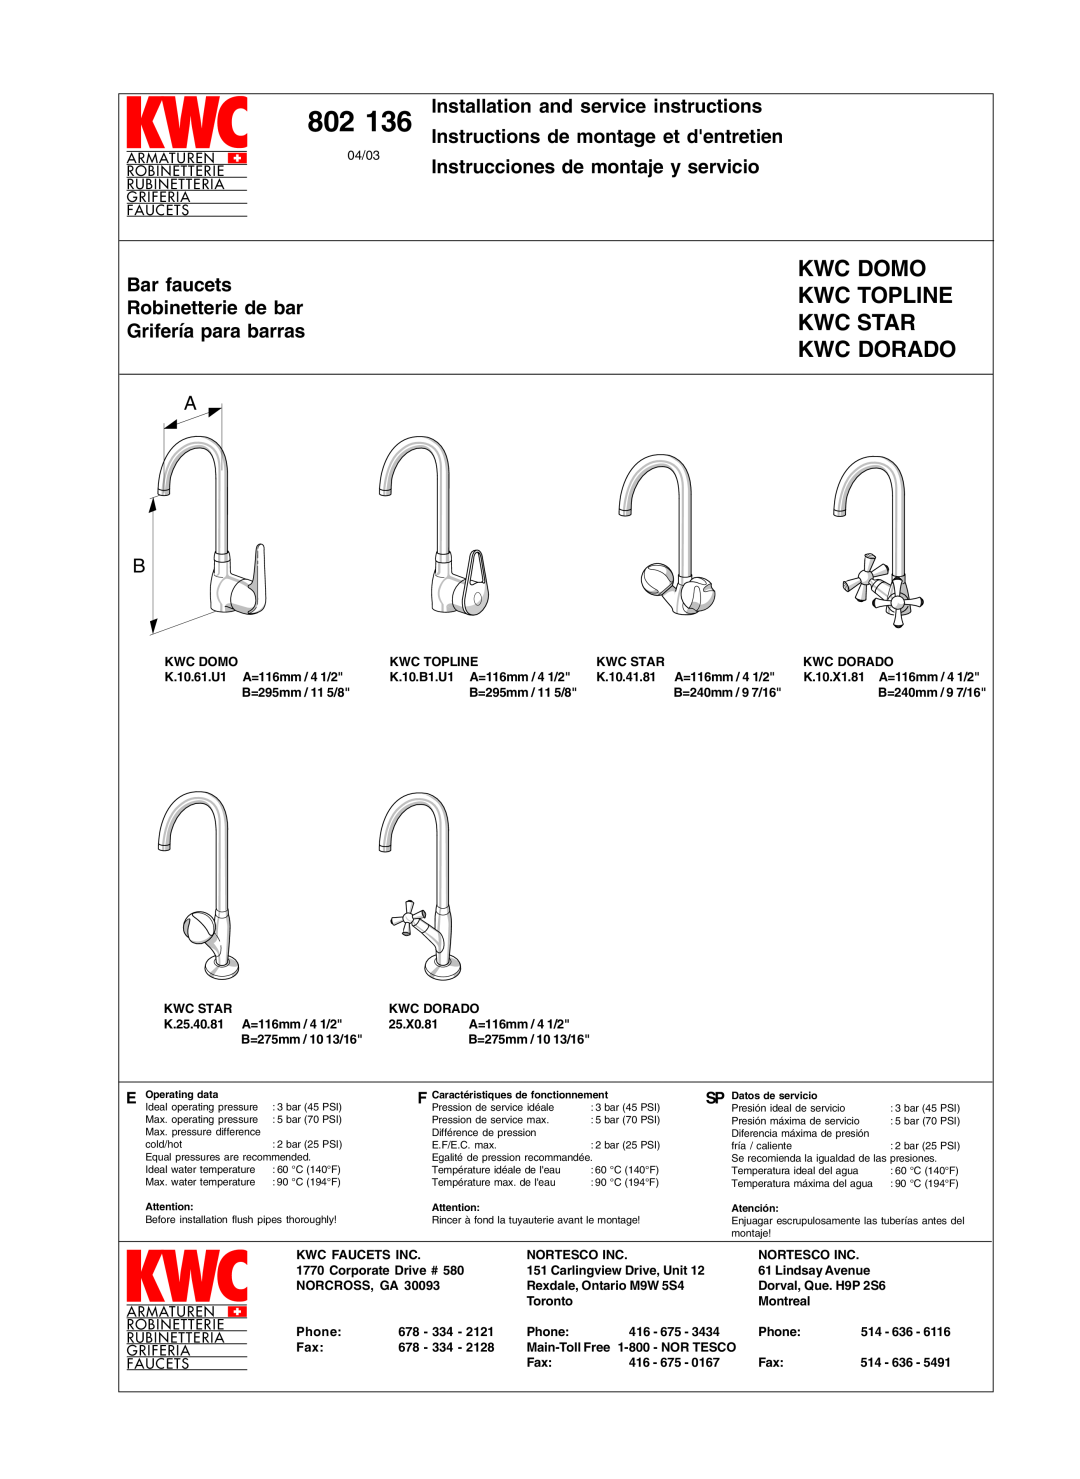 KWC 802 136 manual Kwc Domo, Kwc Topline, Kwc Star, Kwc Dorado, Installation and service instructions, Bar faucets 